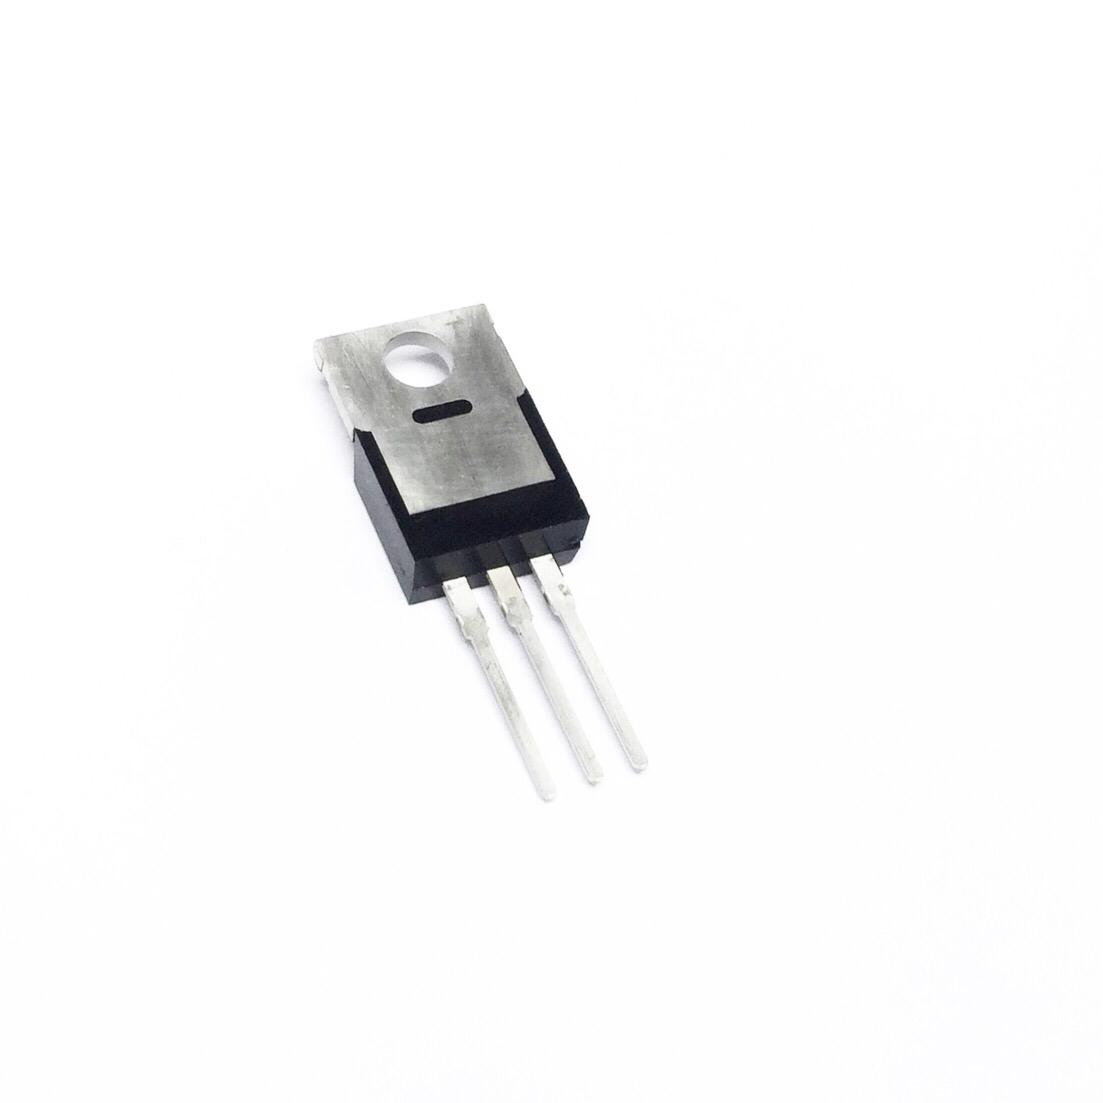 Transistor Mosfet IRF540N TO-220